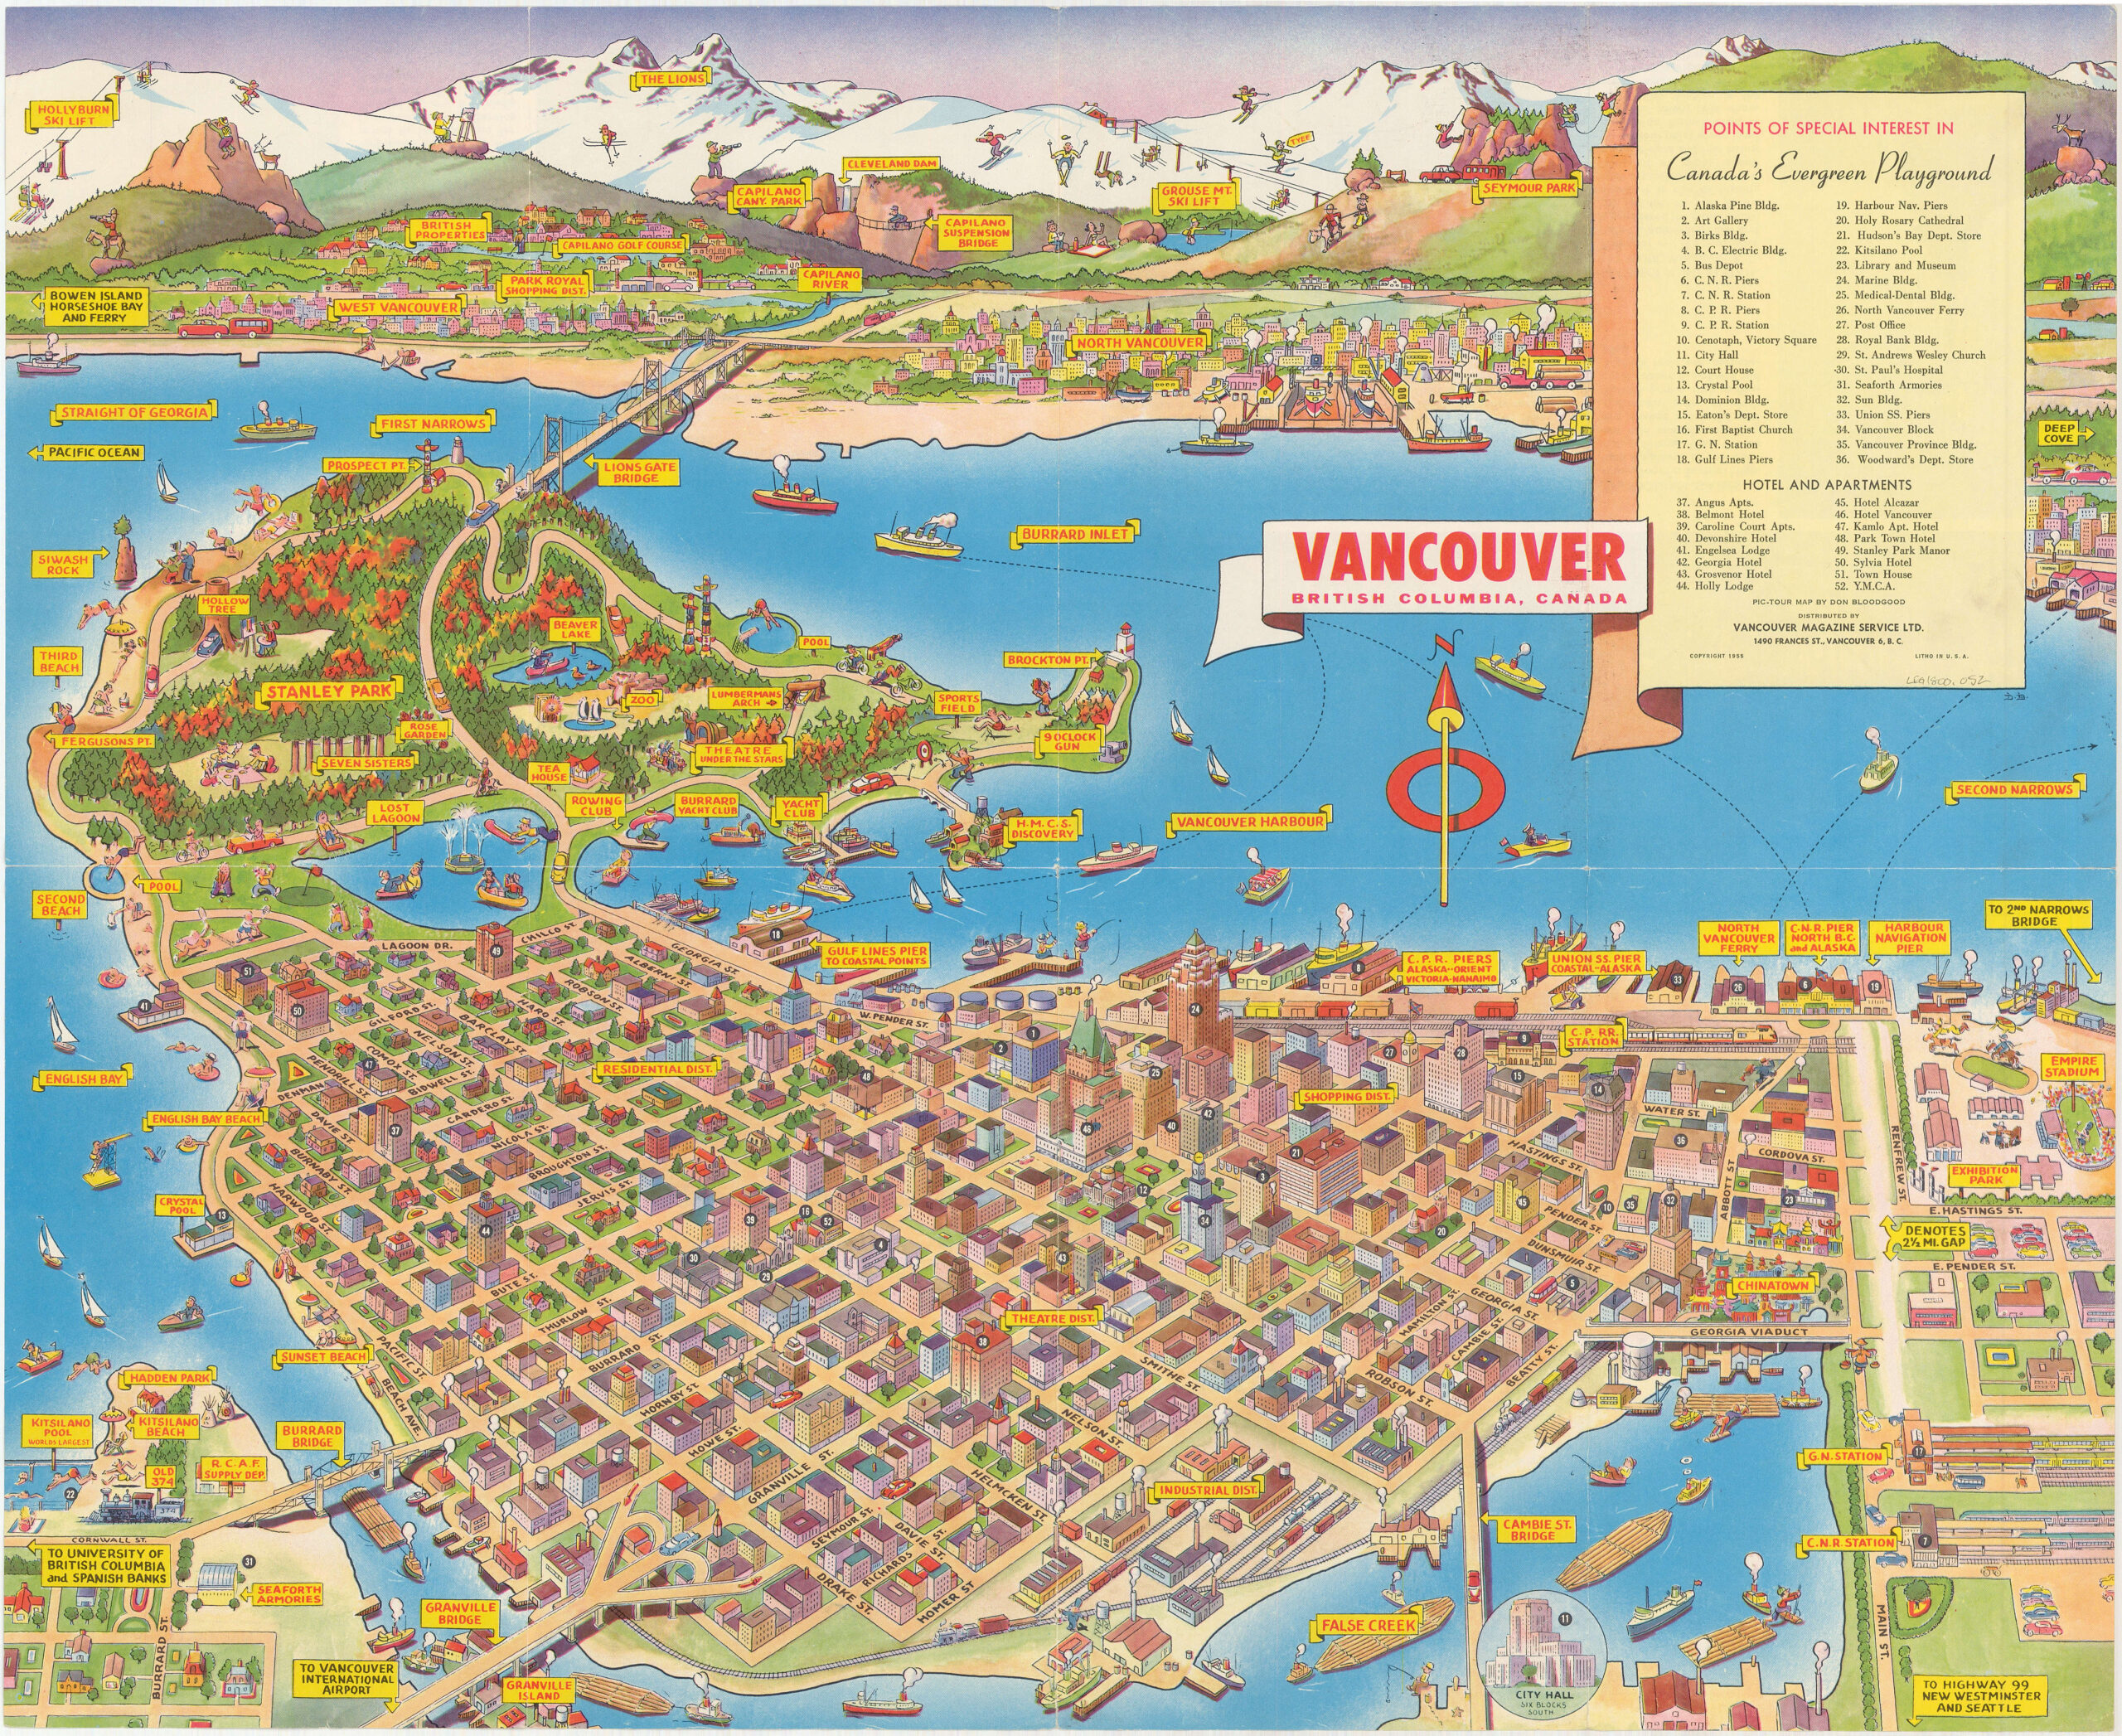 vancouver-tourist-1955-leg1800.052